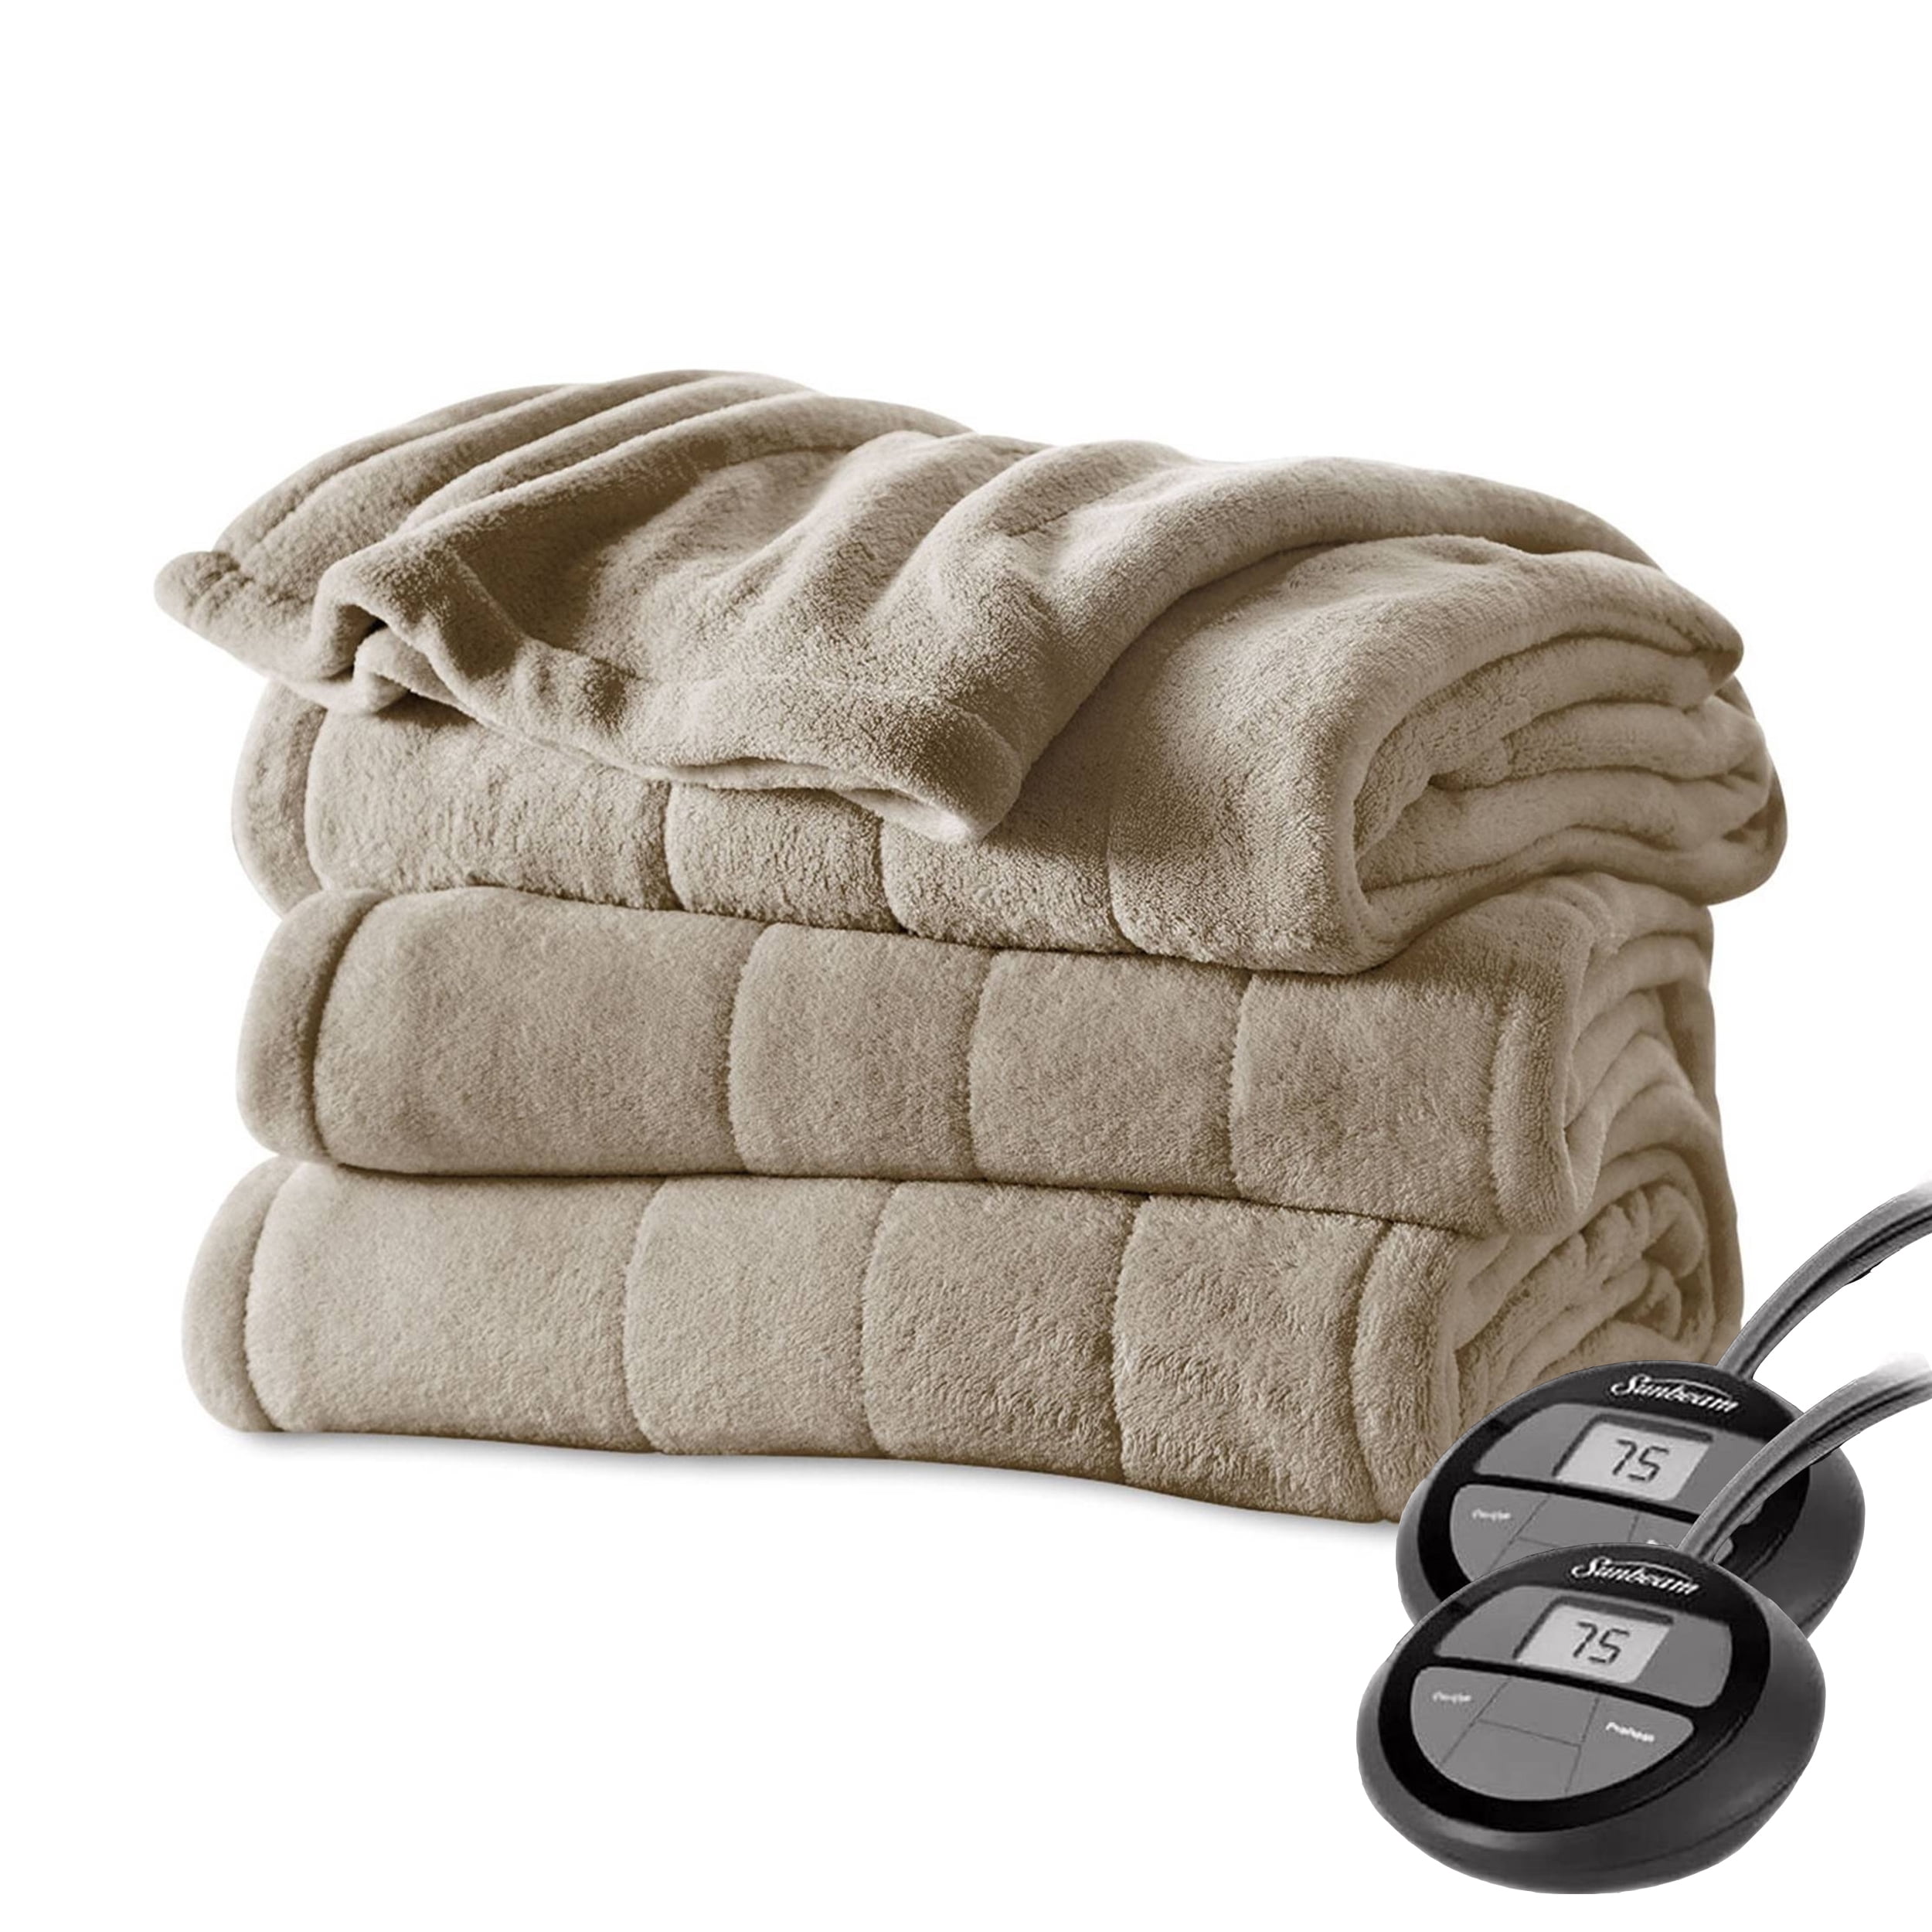 Fine Element King Size Electric Heated Blanket Washable Hot Warm White 